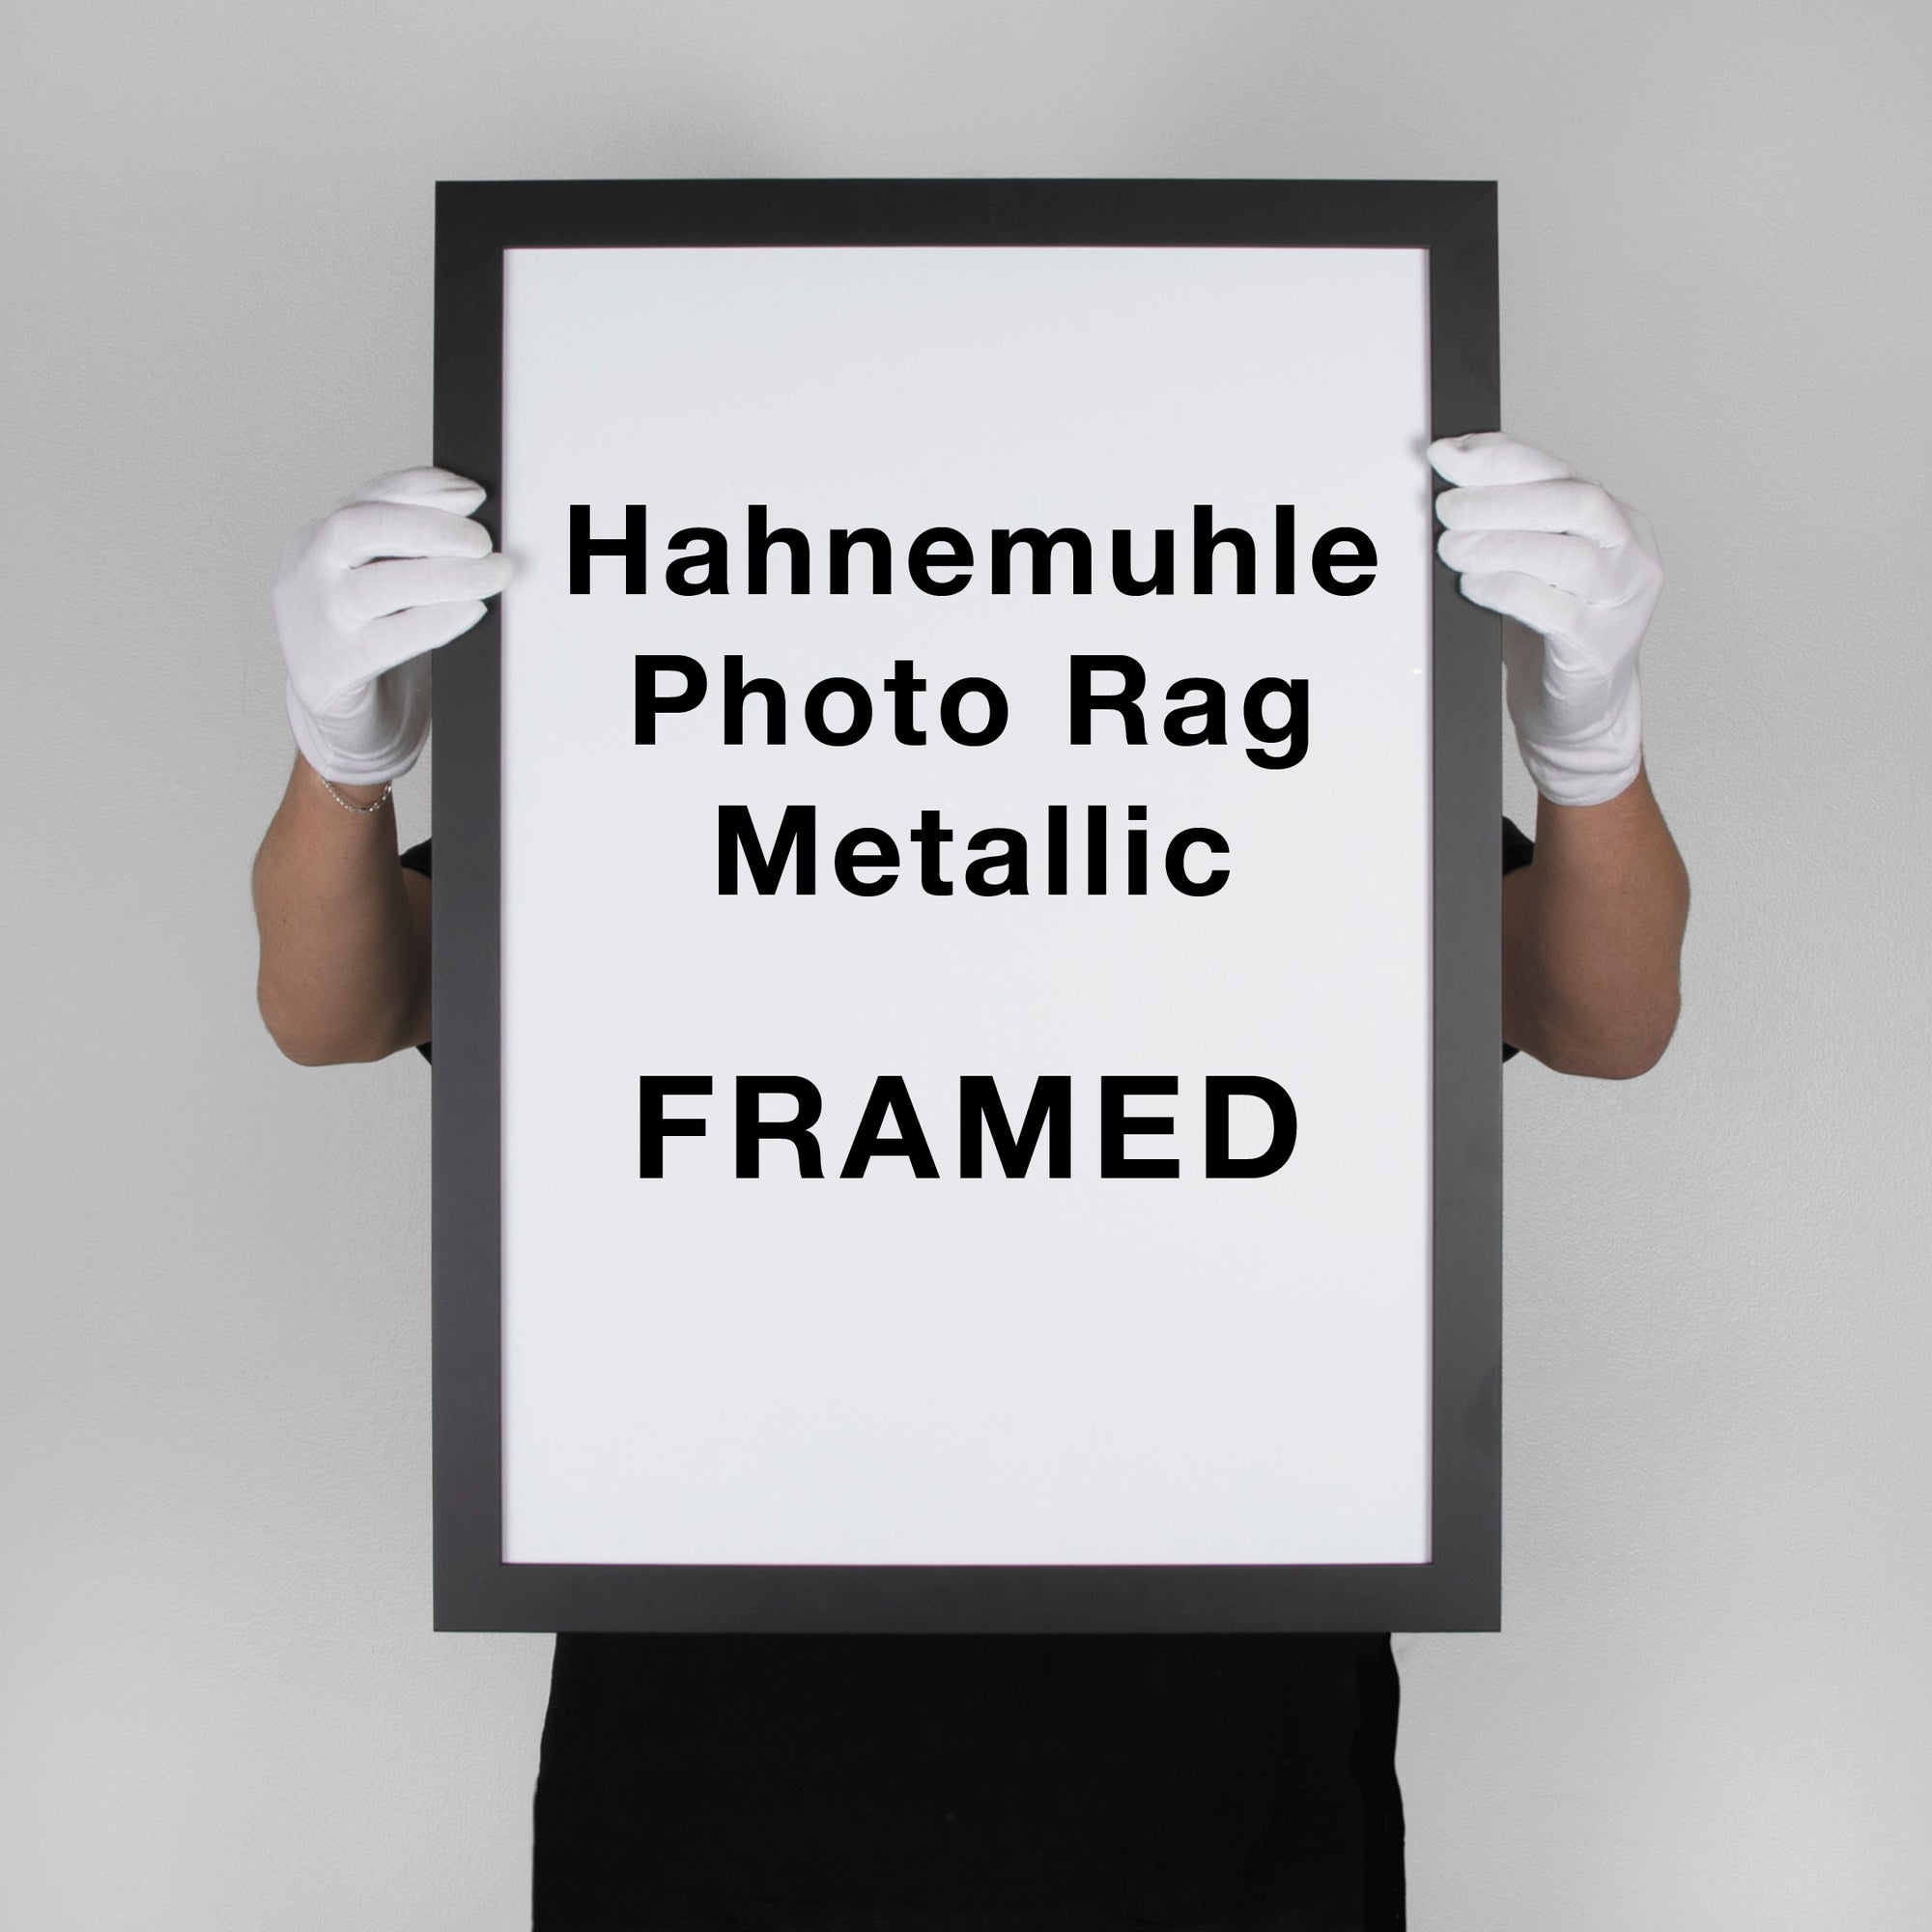 Hahnemuhle Photo Rag Metallic | FRAMED